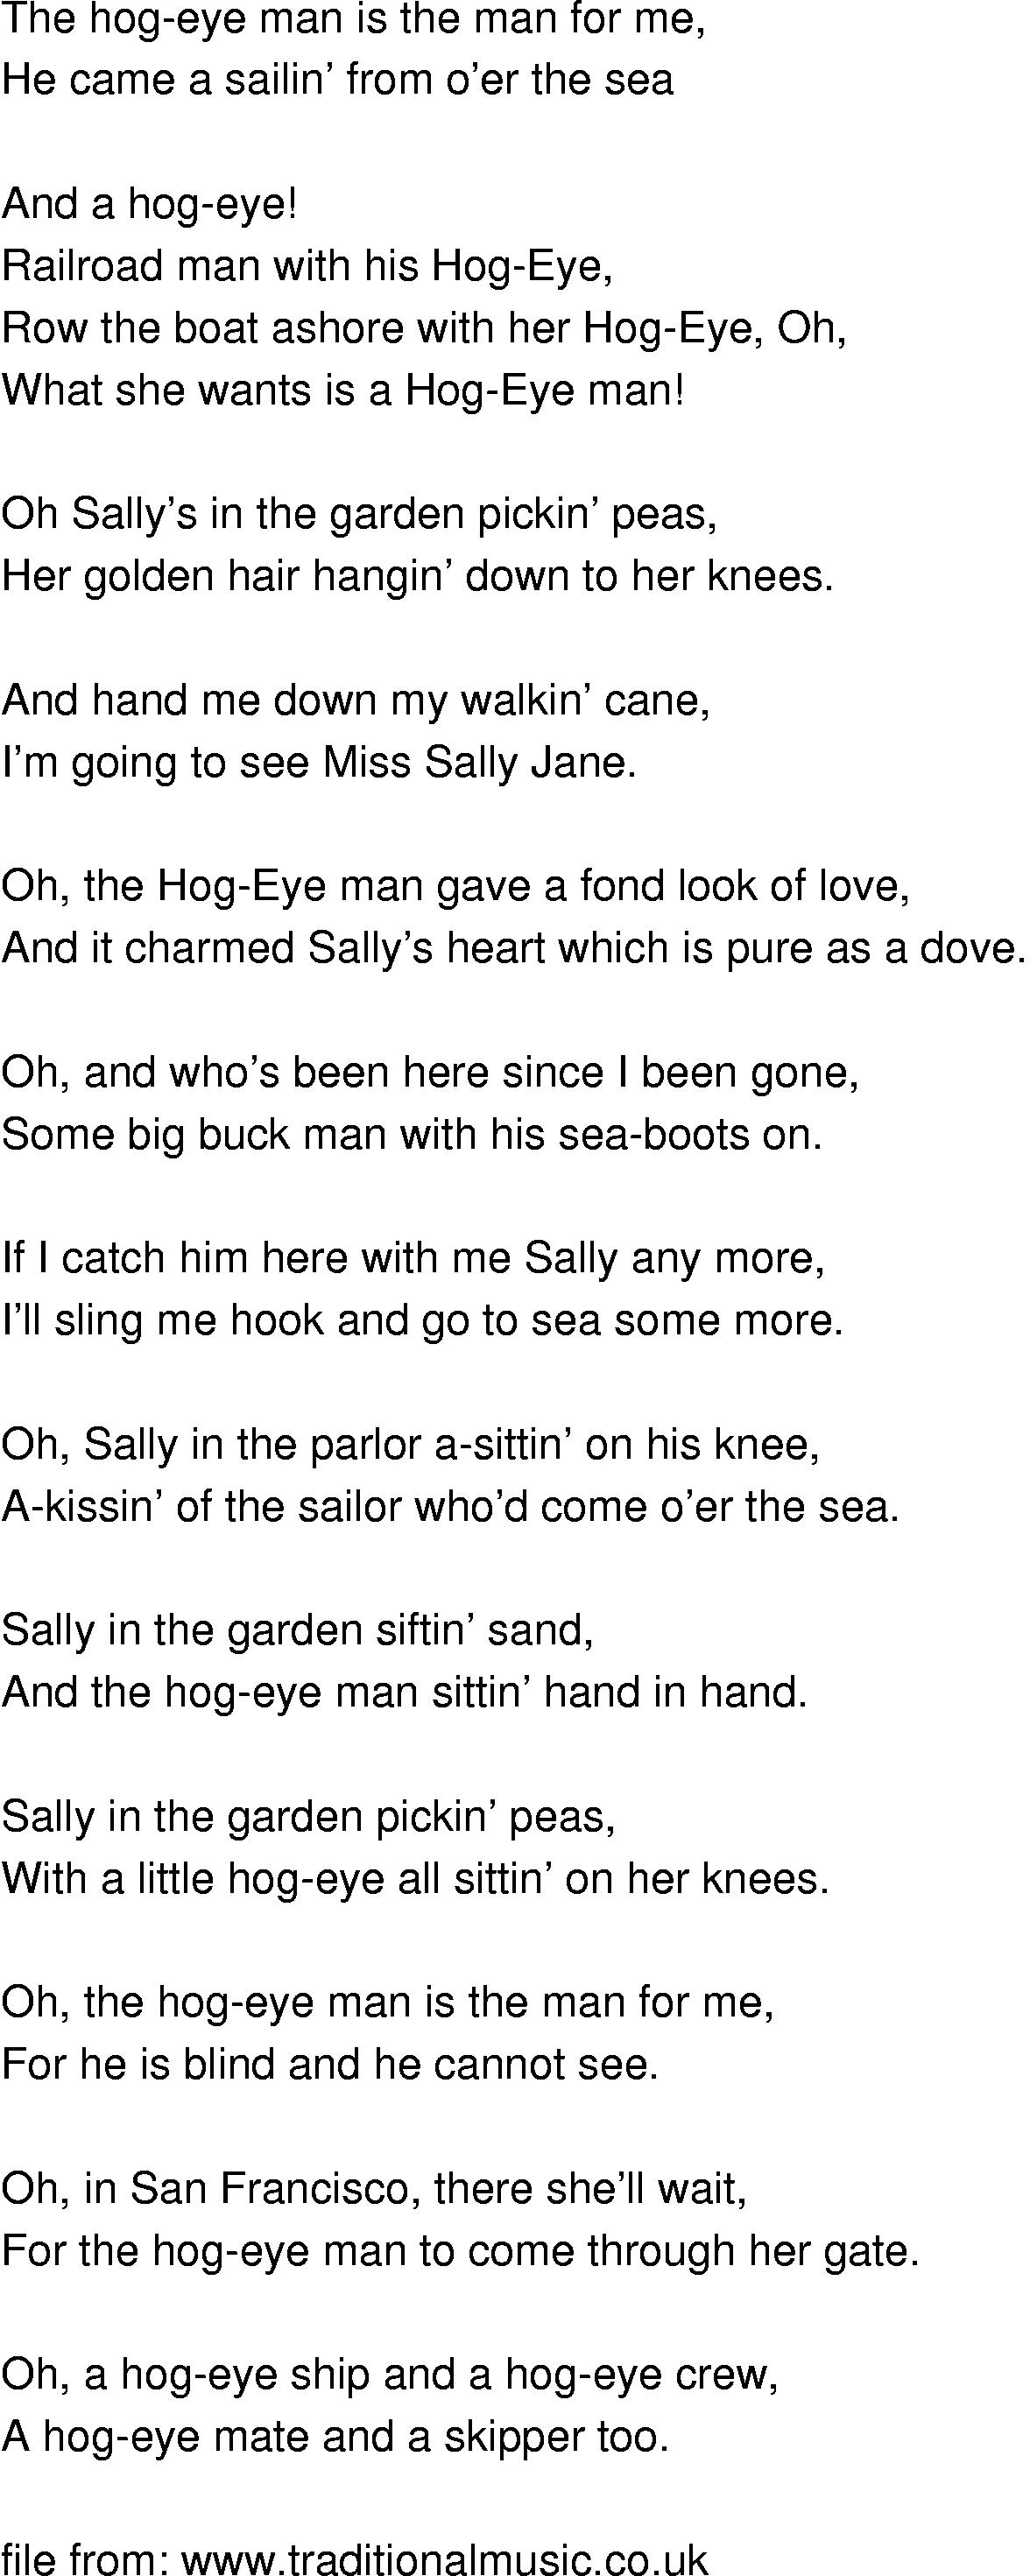 Old-Time (oldtimey) Song Lyrics - hog eye man sailor shanty